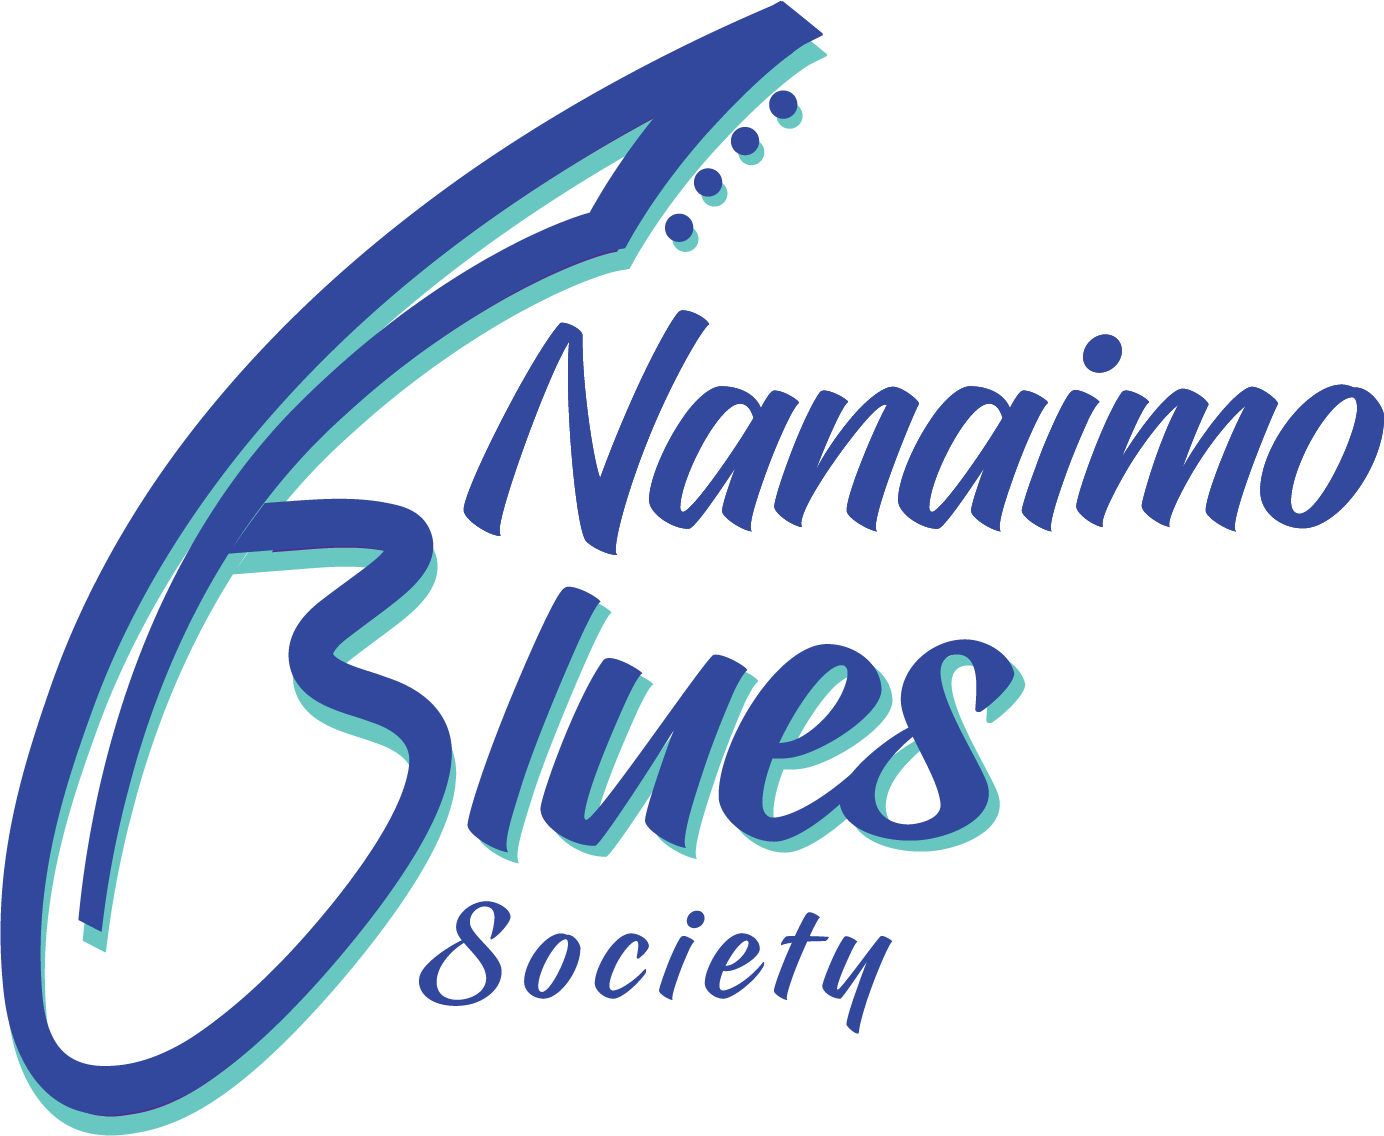 Nanaimo Blues Society logo